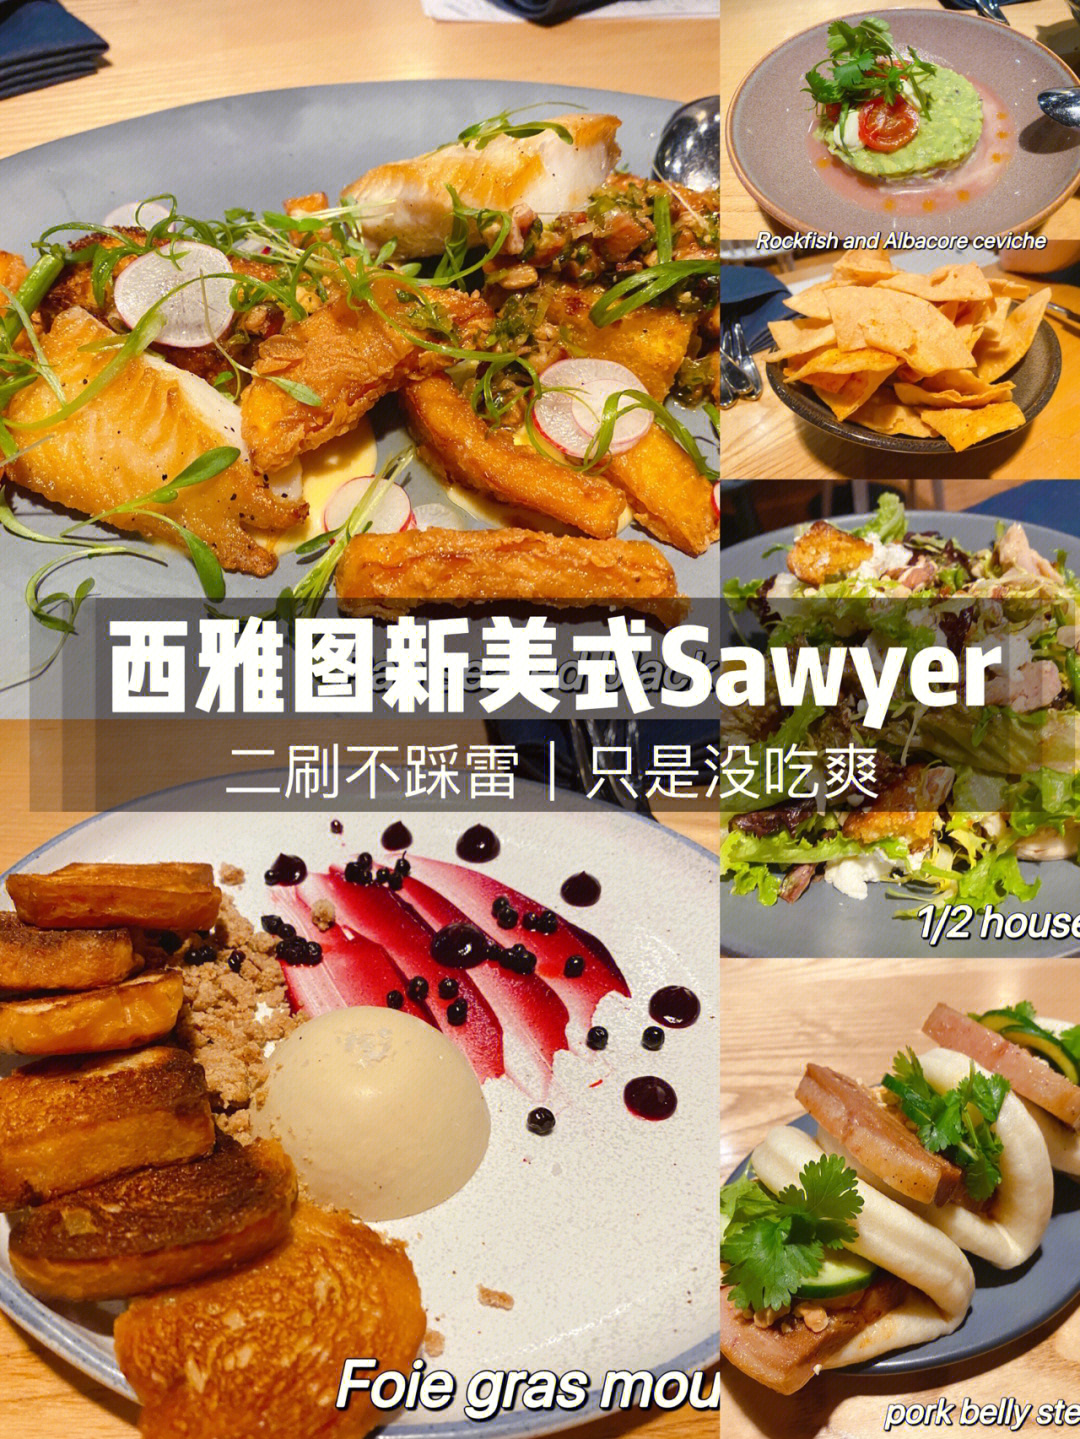 sawyerfamily图片